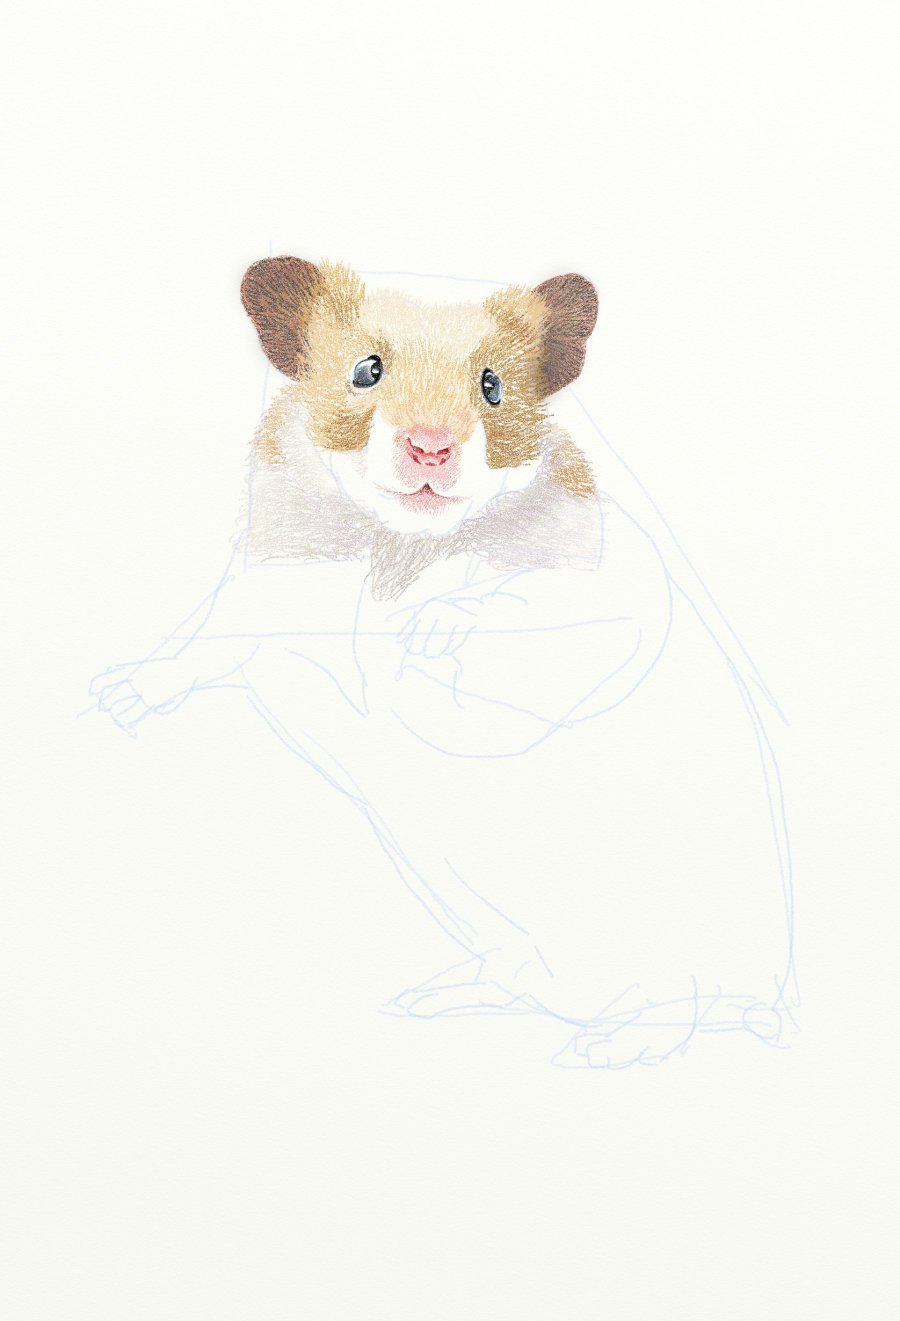 painter绘制一只可爱的小老鼠插画8